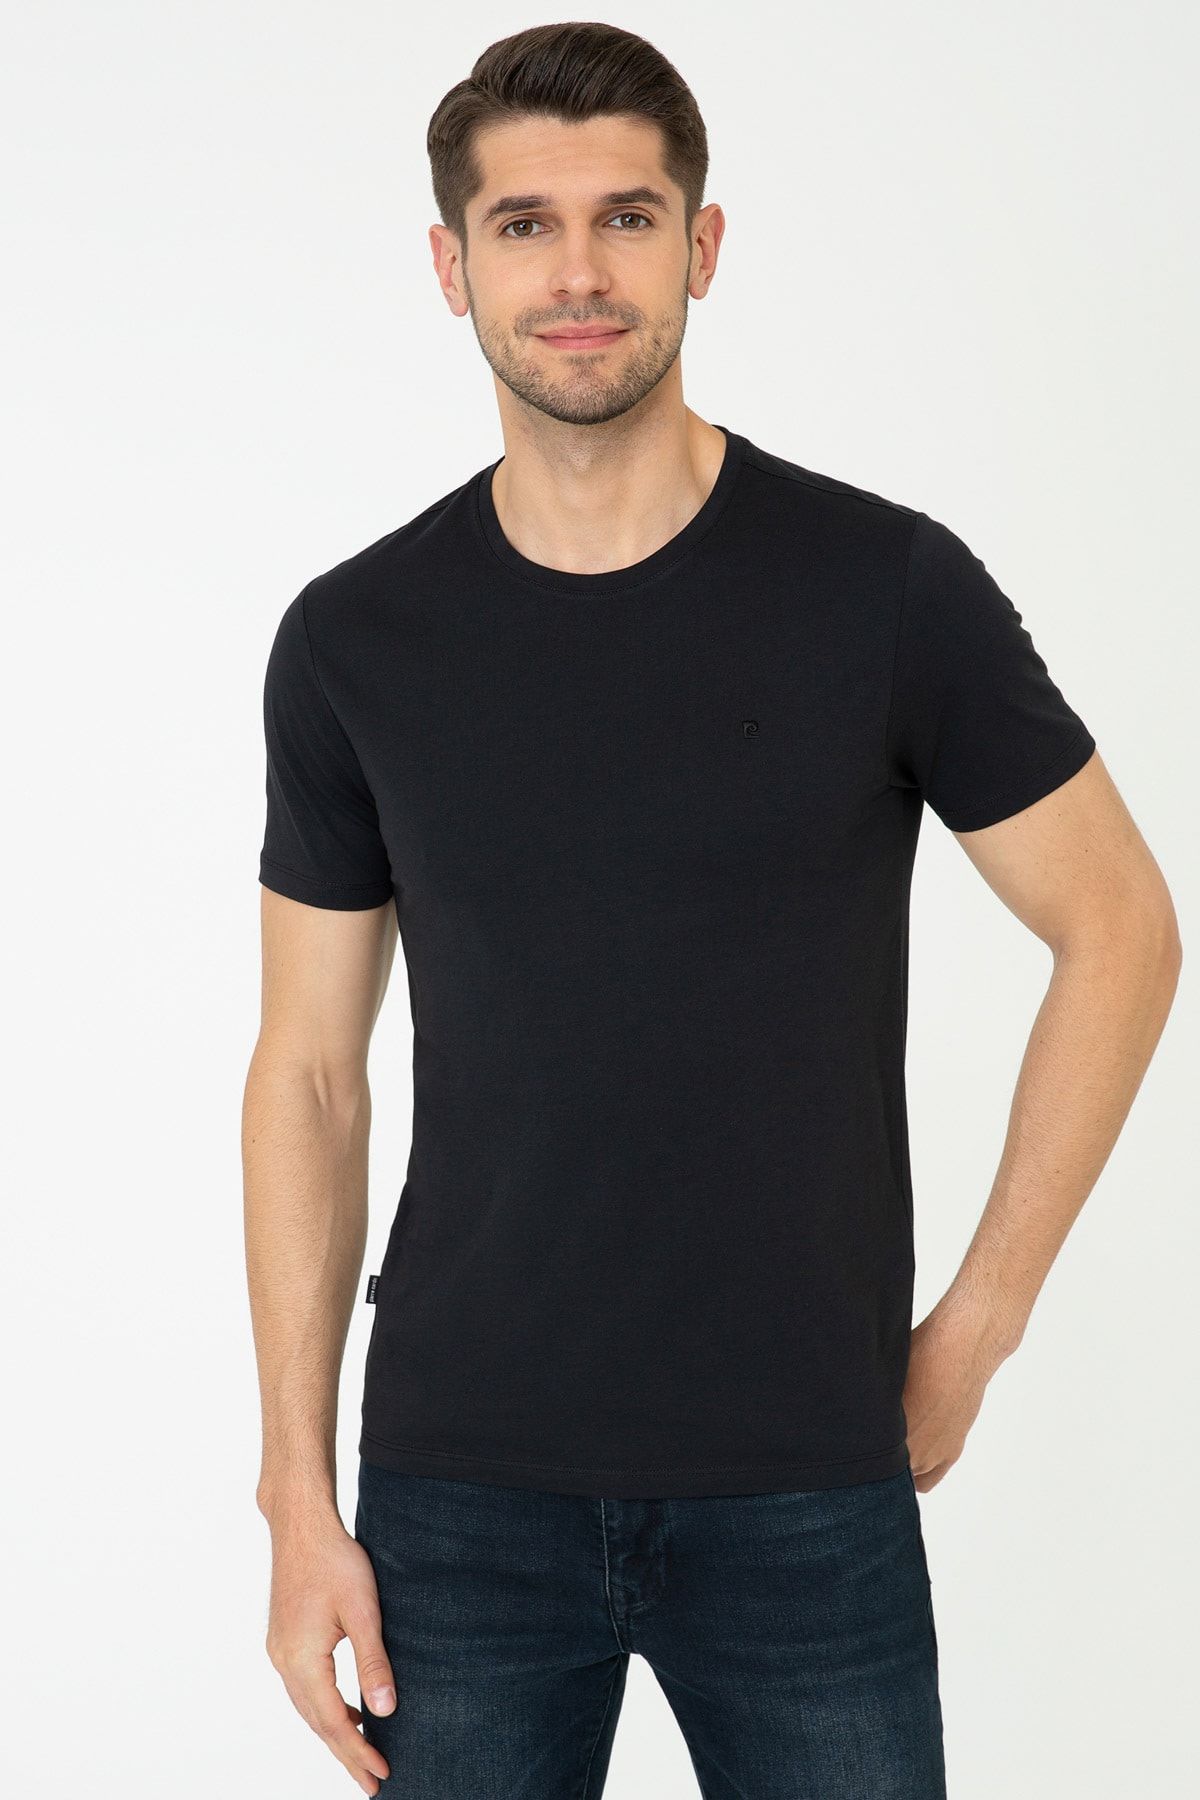 Pierre Cardin Erkek Siyah T-Shirt G021Gl011.000.1431715